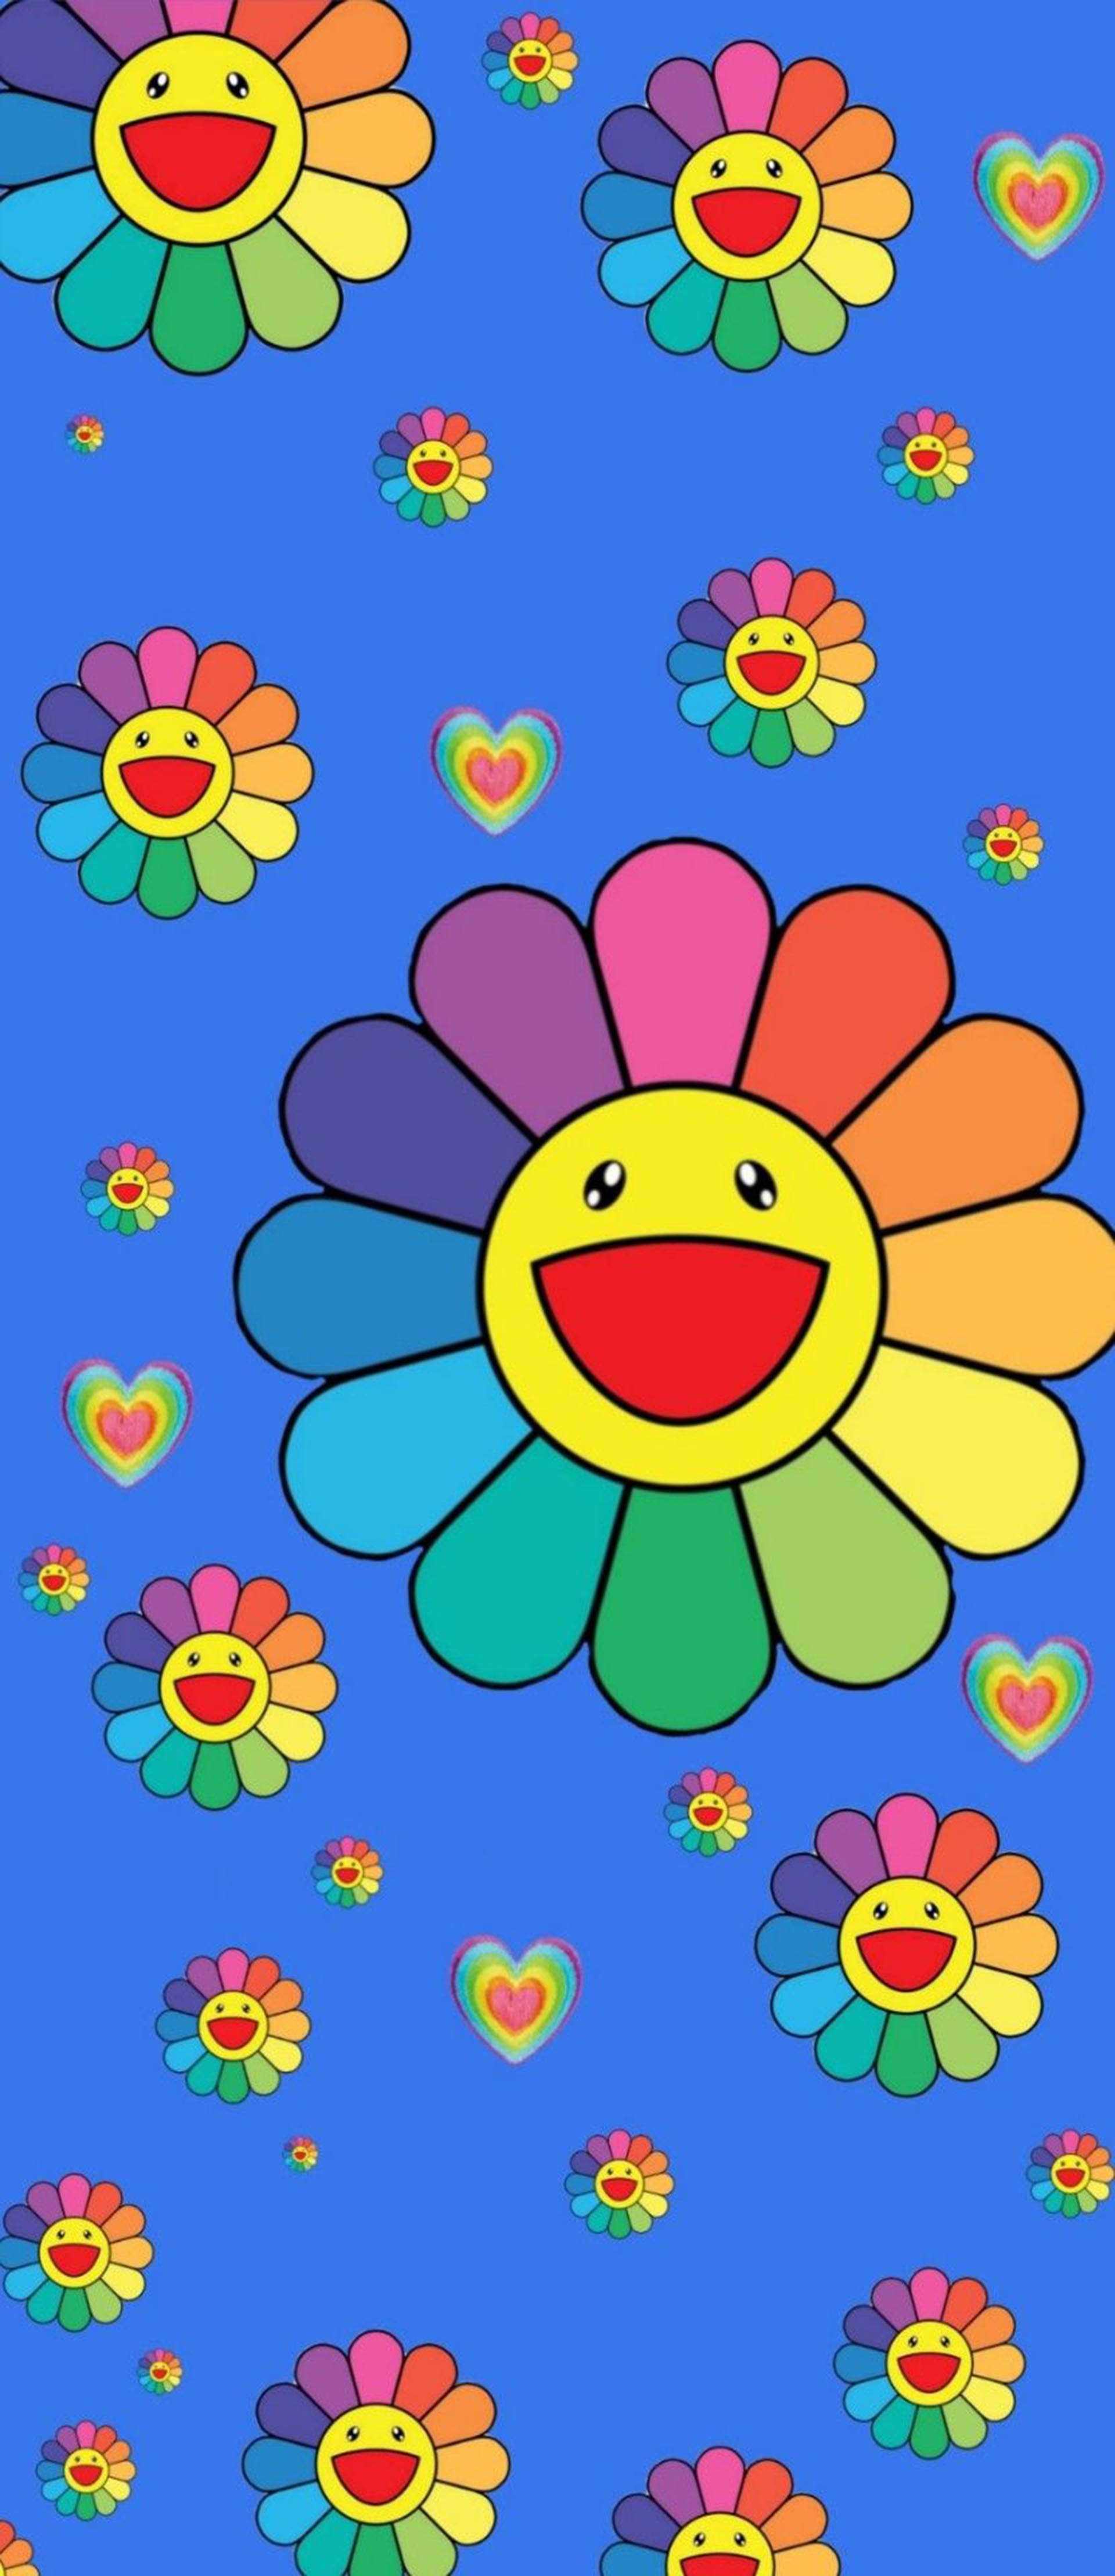 Download Indie Aesthetic Smiling Flower Wallpaper 